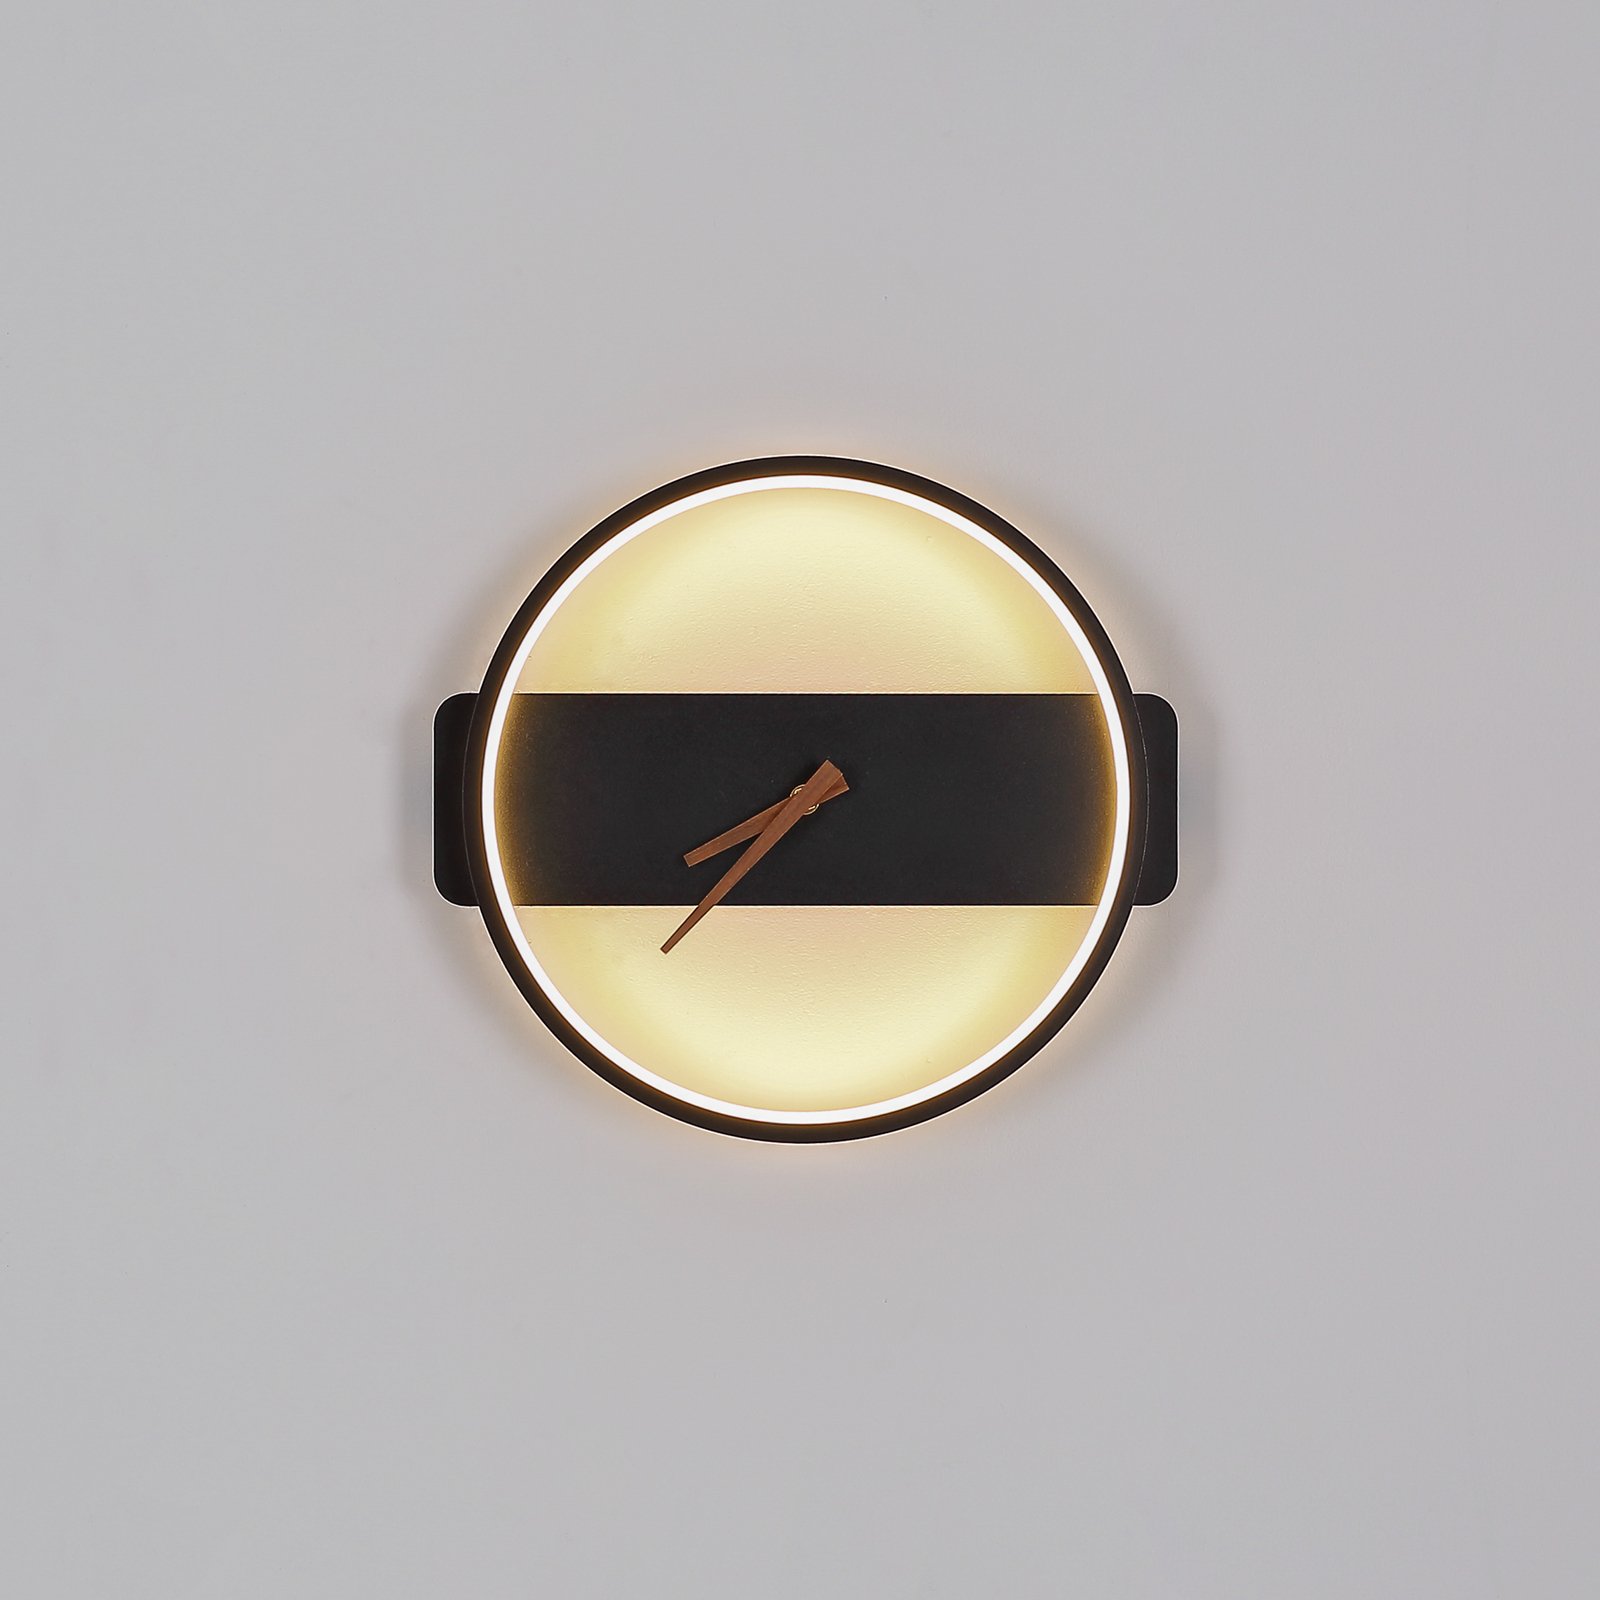 LED fali lámpa Sussy órával fekete, 32 cm széles